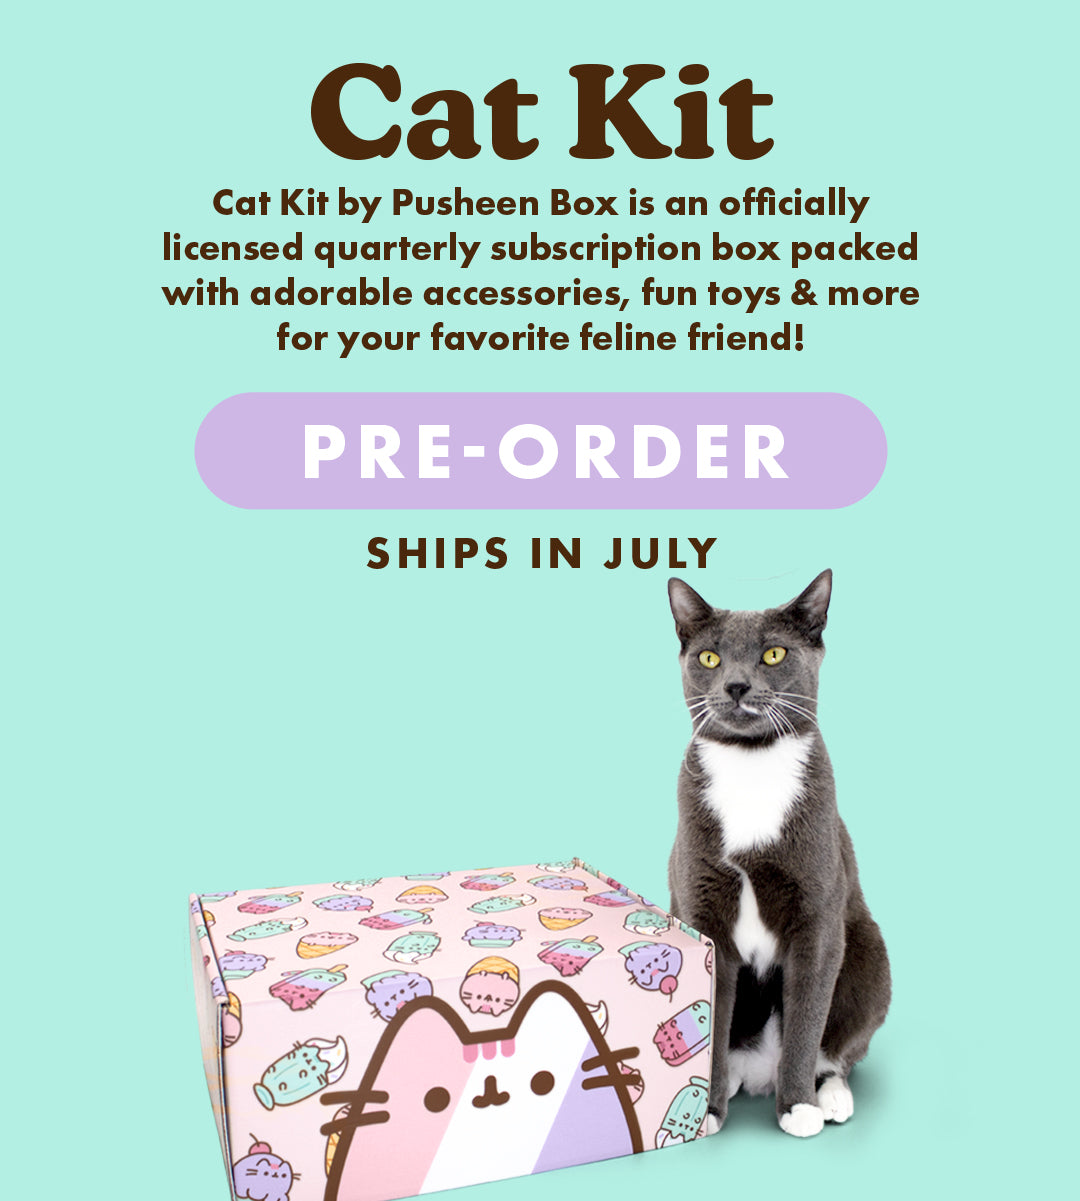 Pusheen Box | The Internet's Favorite Cat!